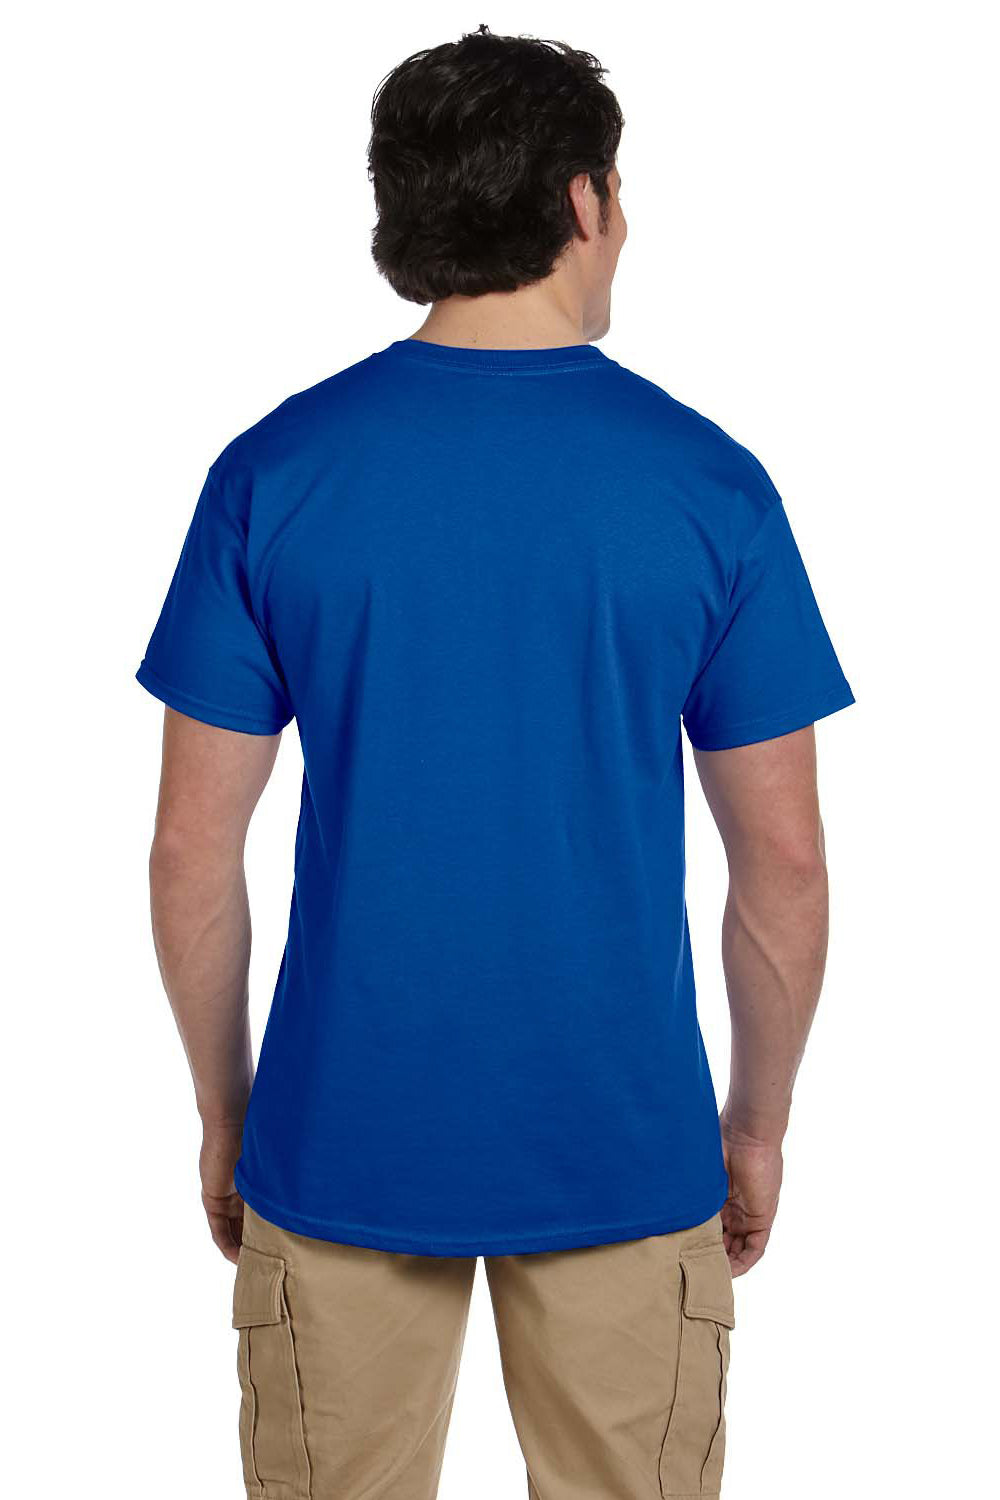 Fruit Of The Loom 3931 Mens HD Jersey Short Sleeve Crewneck T-Shirt Royal Blue Back